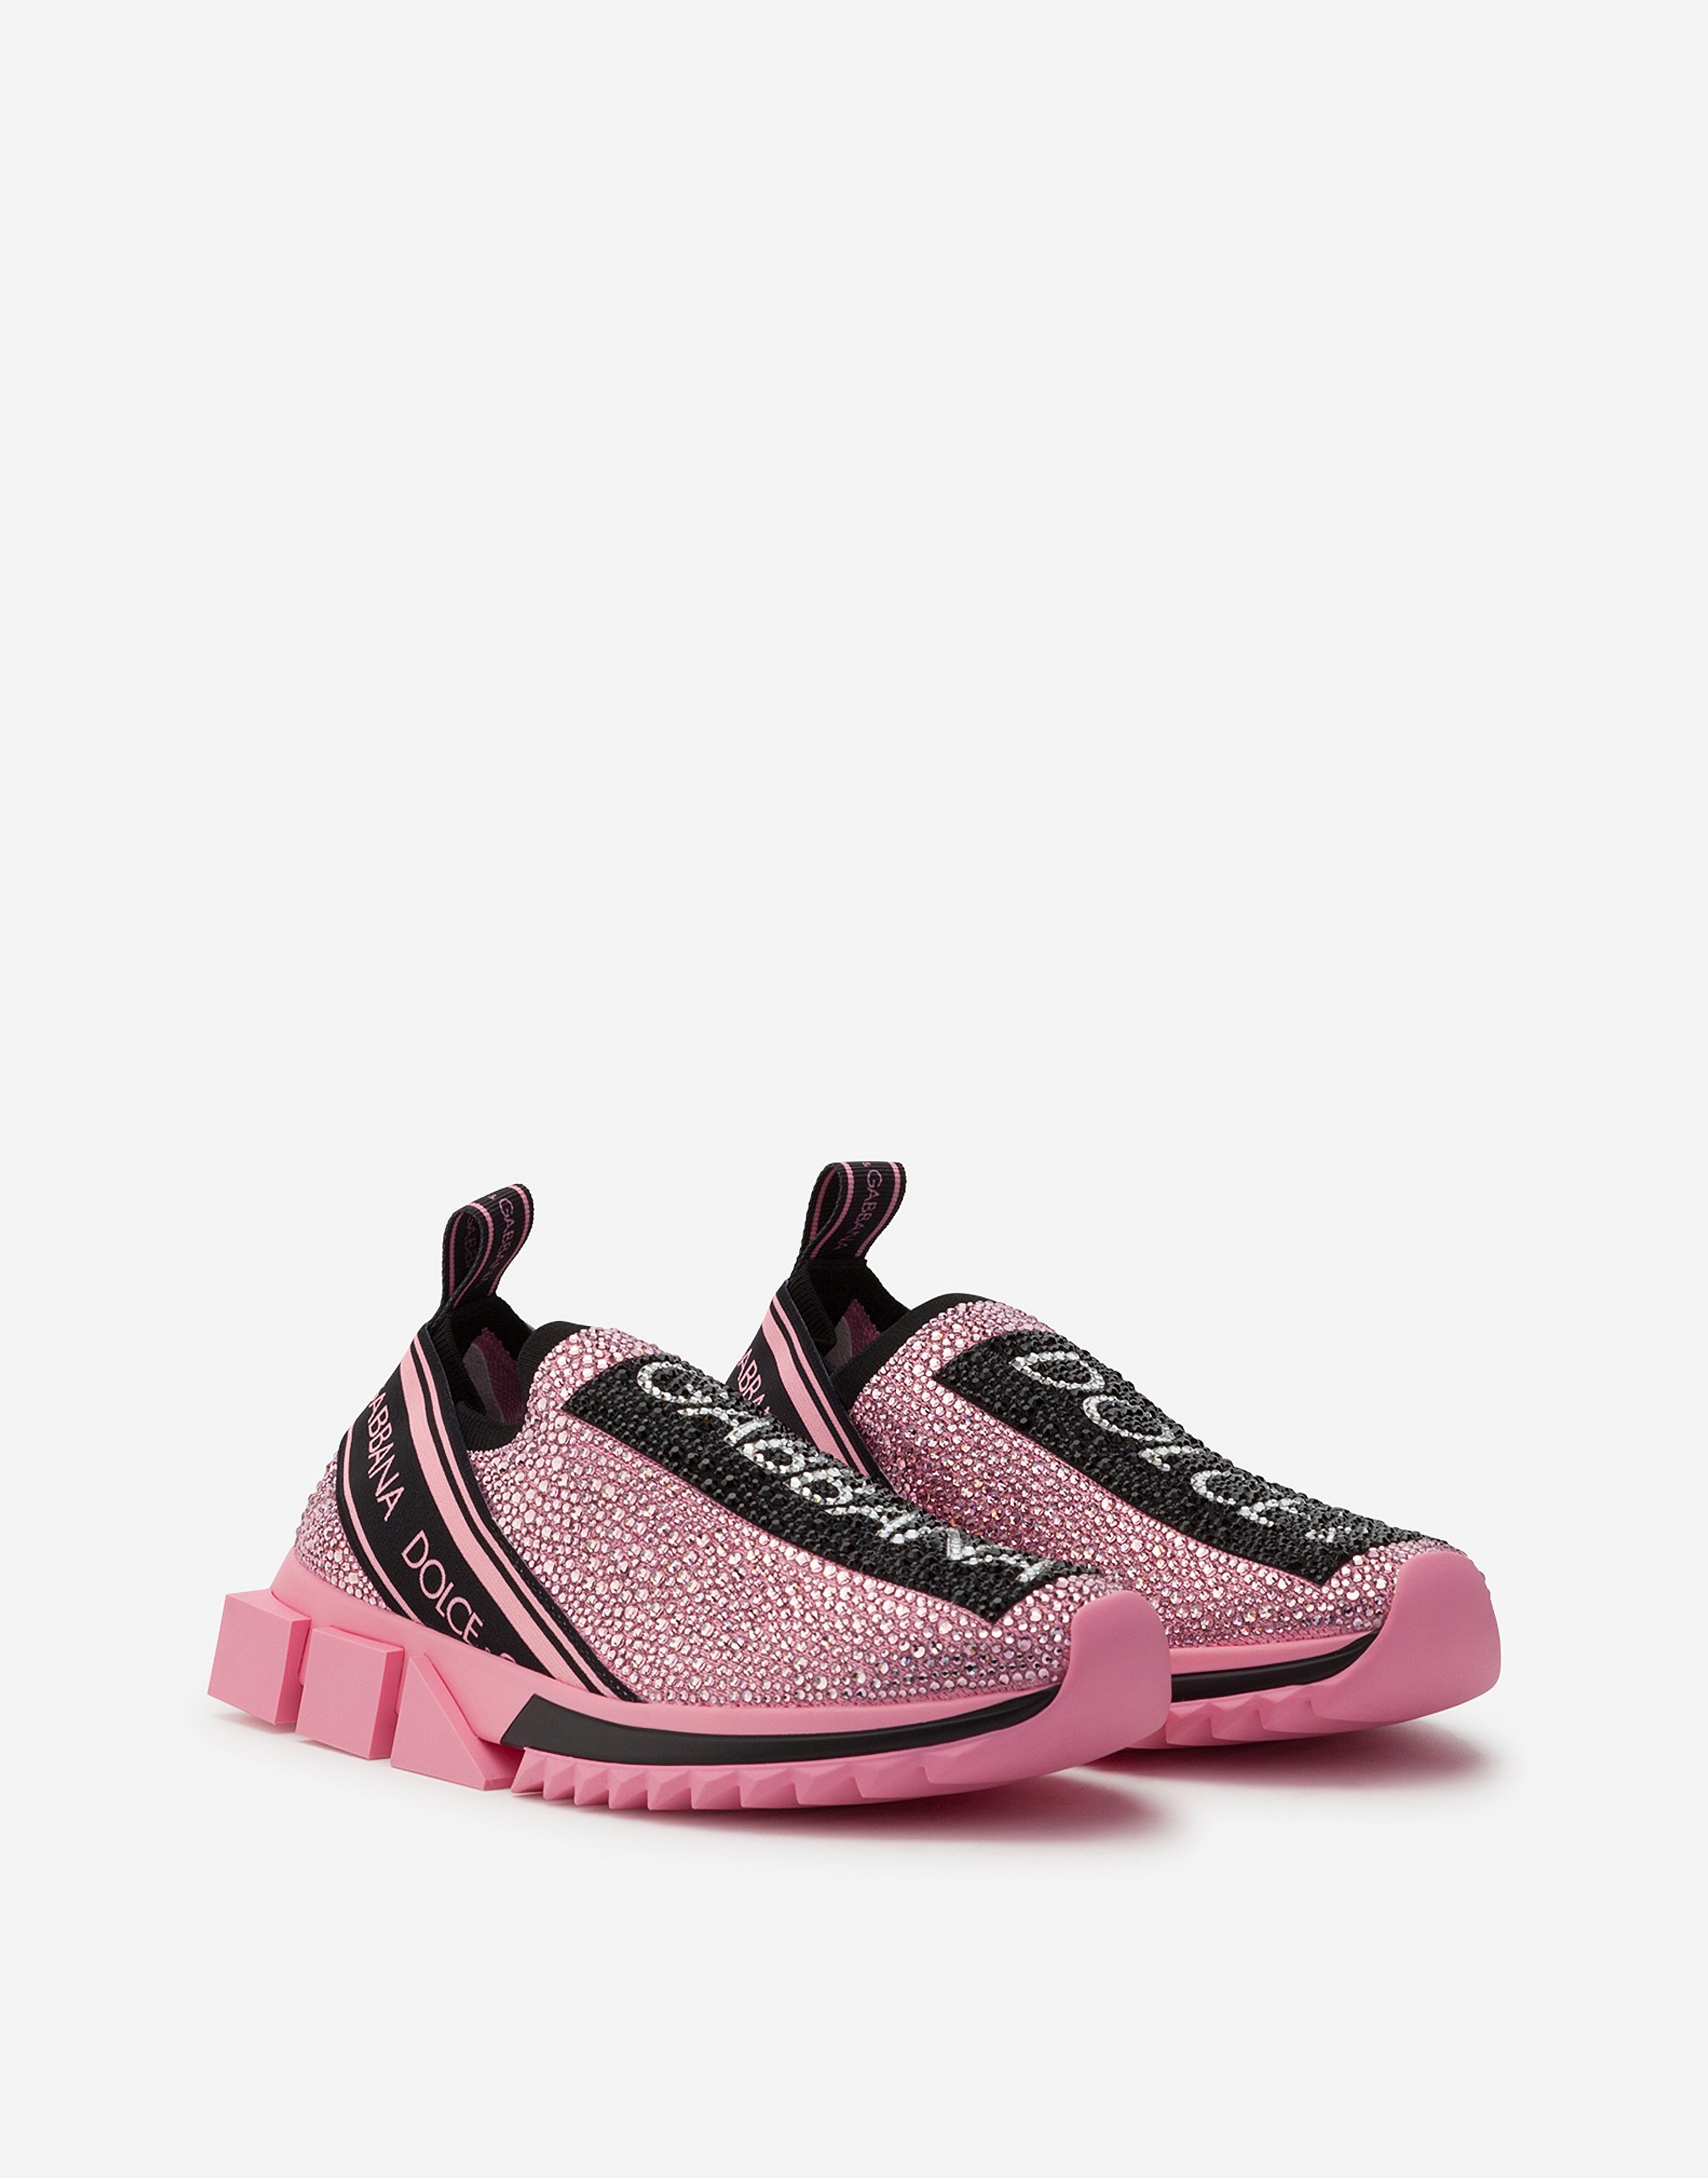 dolce gabbana shoes pink